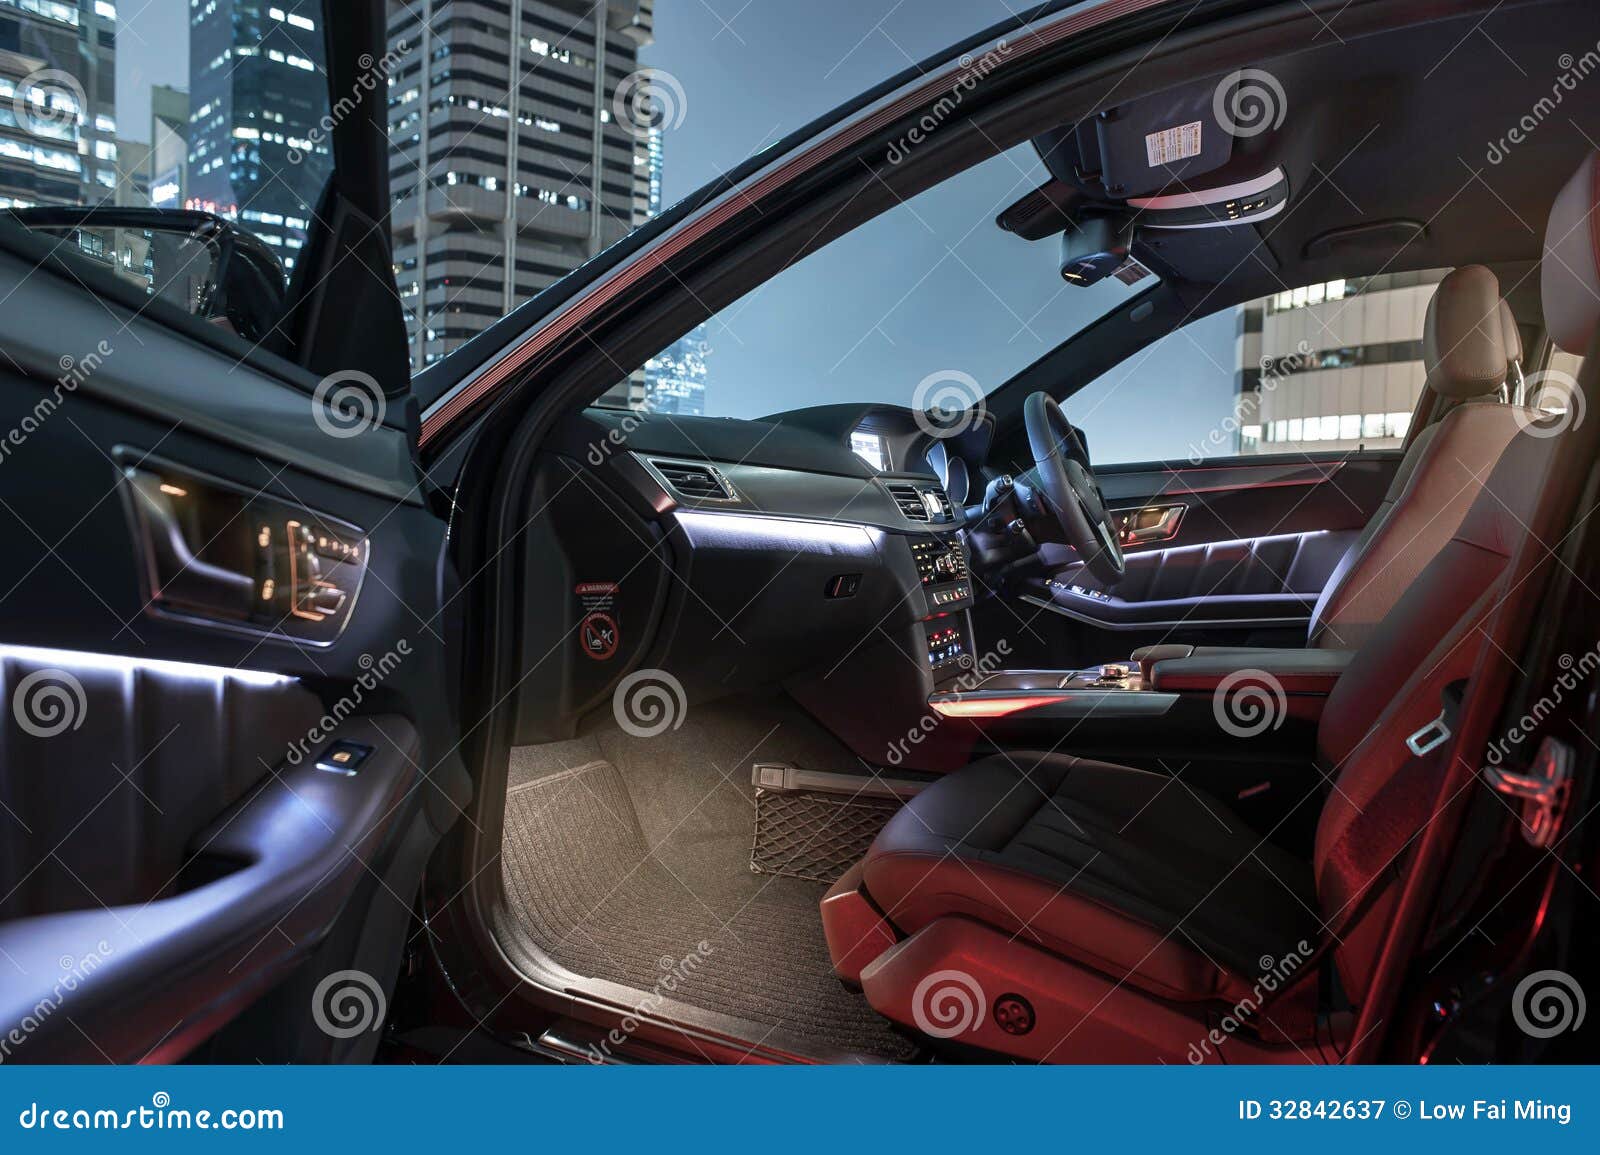 Night Scene For A Car Stock Image Image Of Pretty Seats